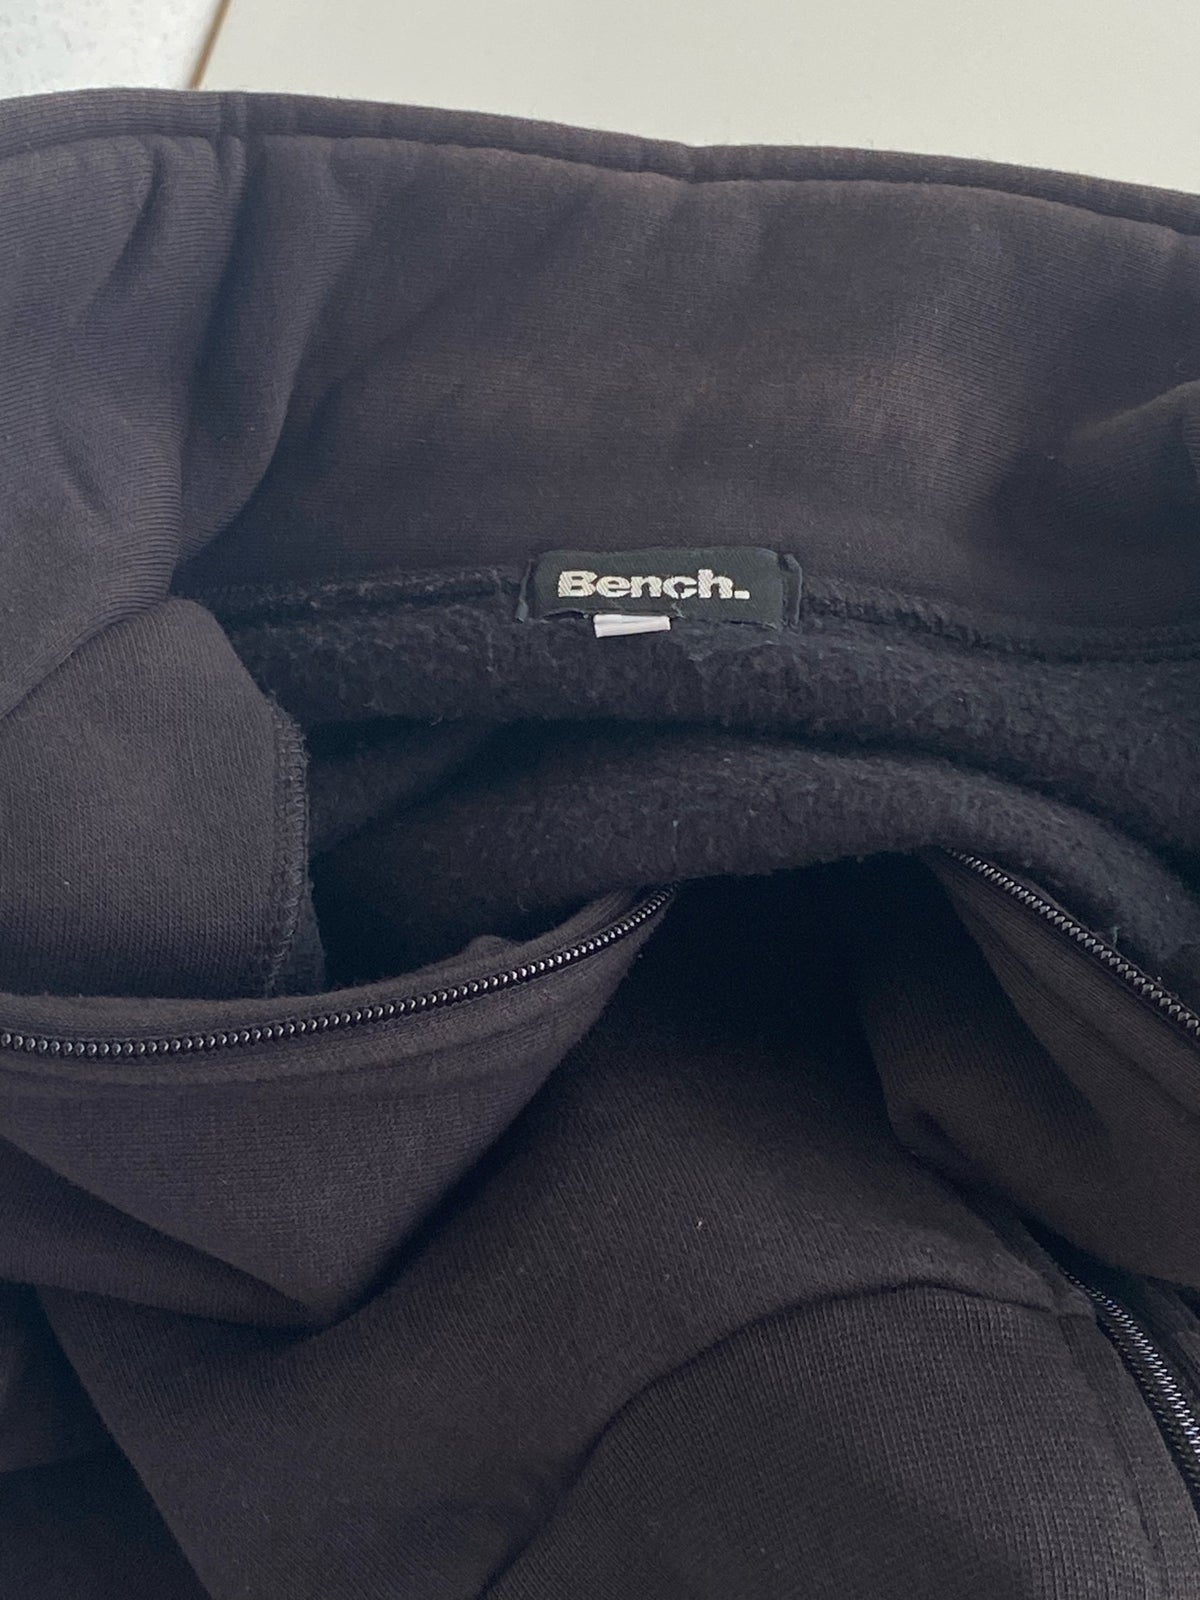 Sweatshirt, Bench, str. L